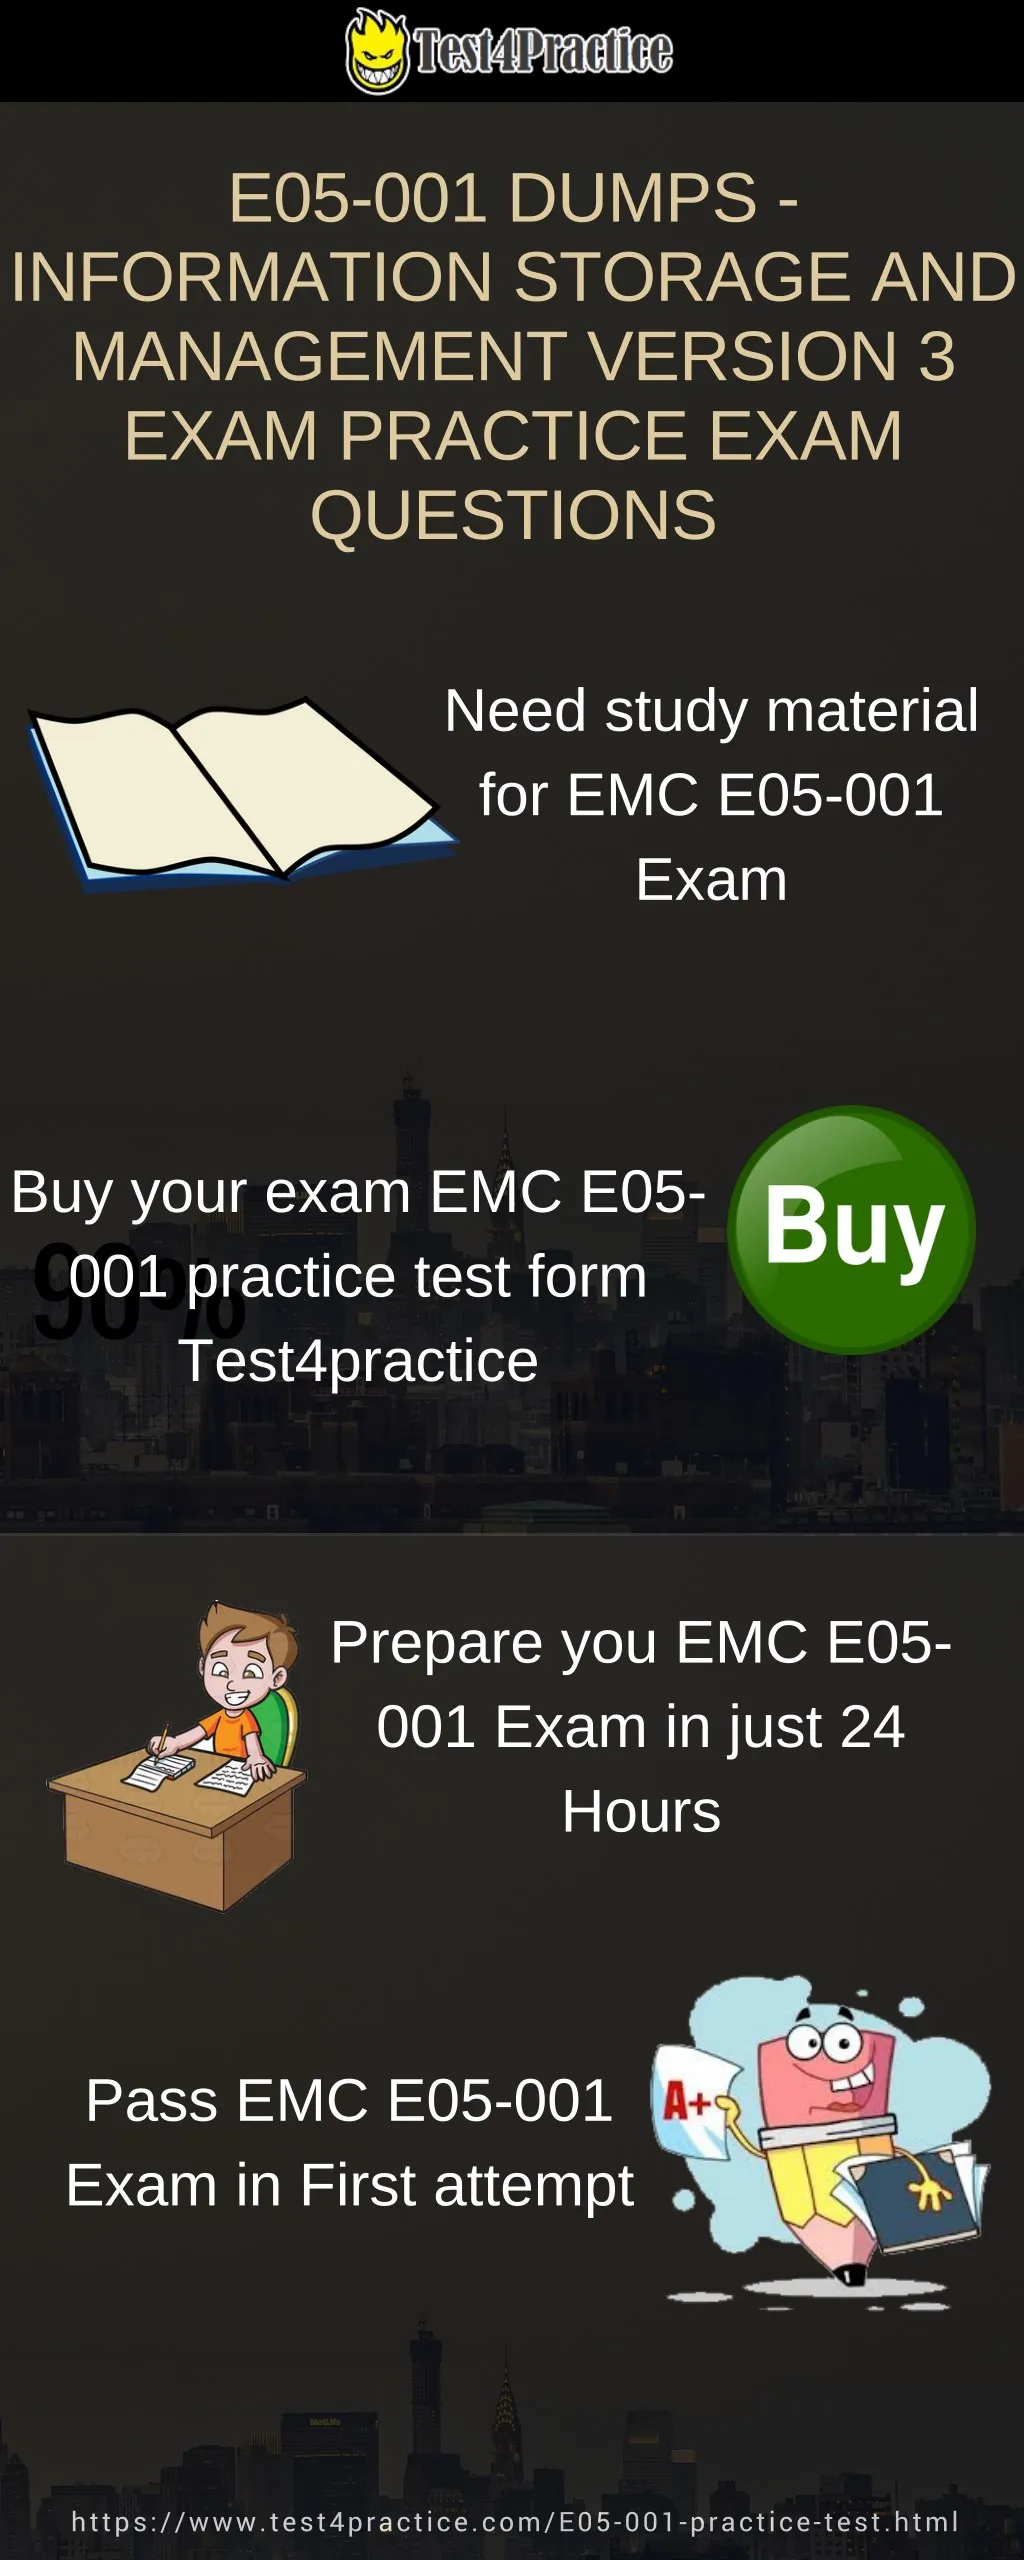 E05 Exam Tips